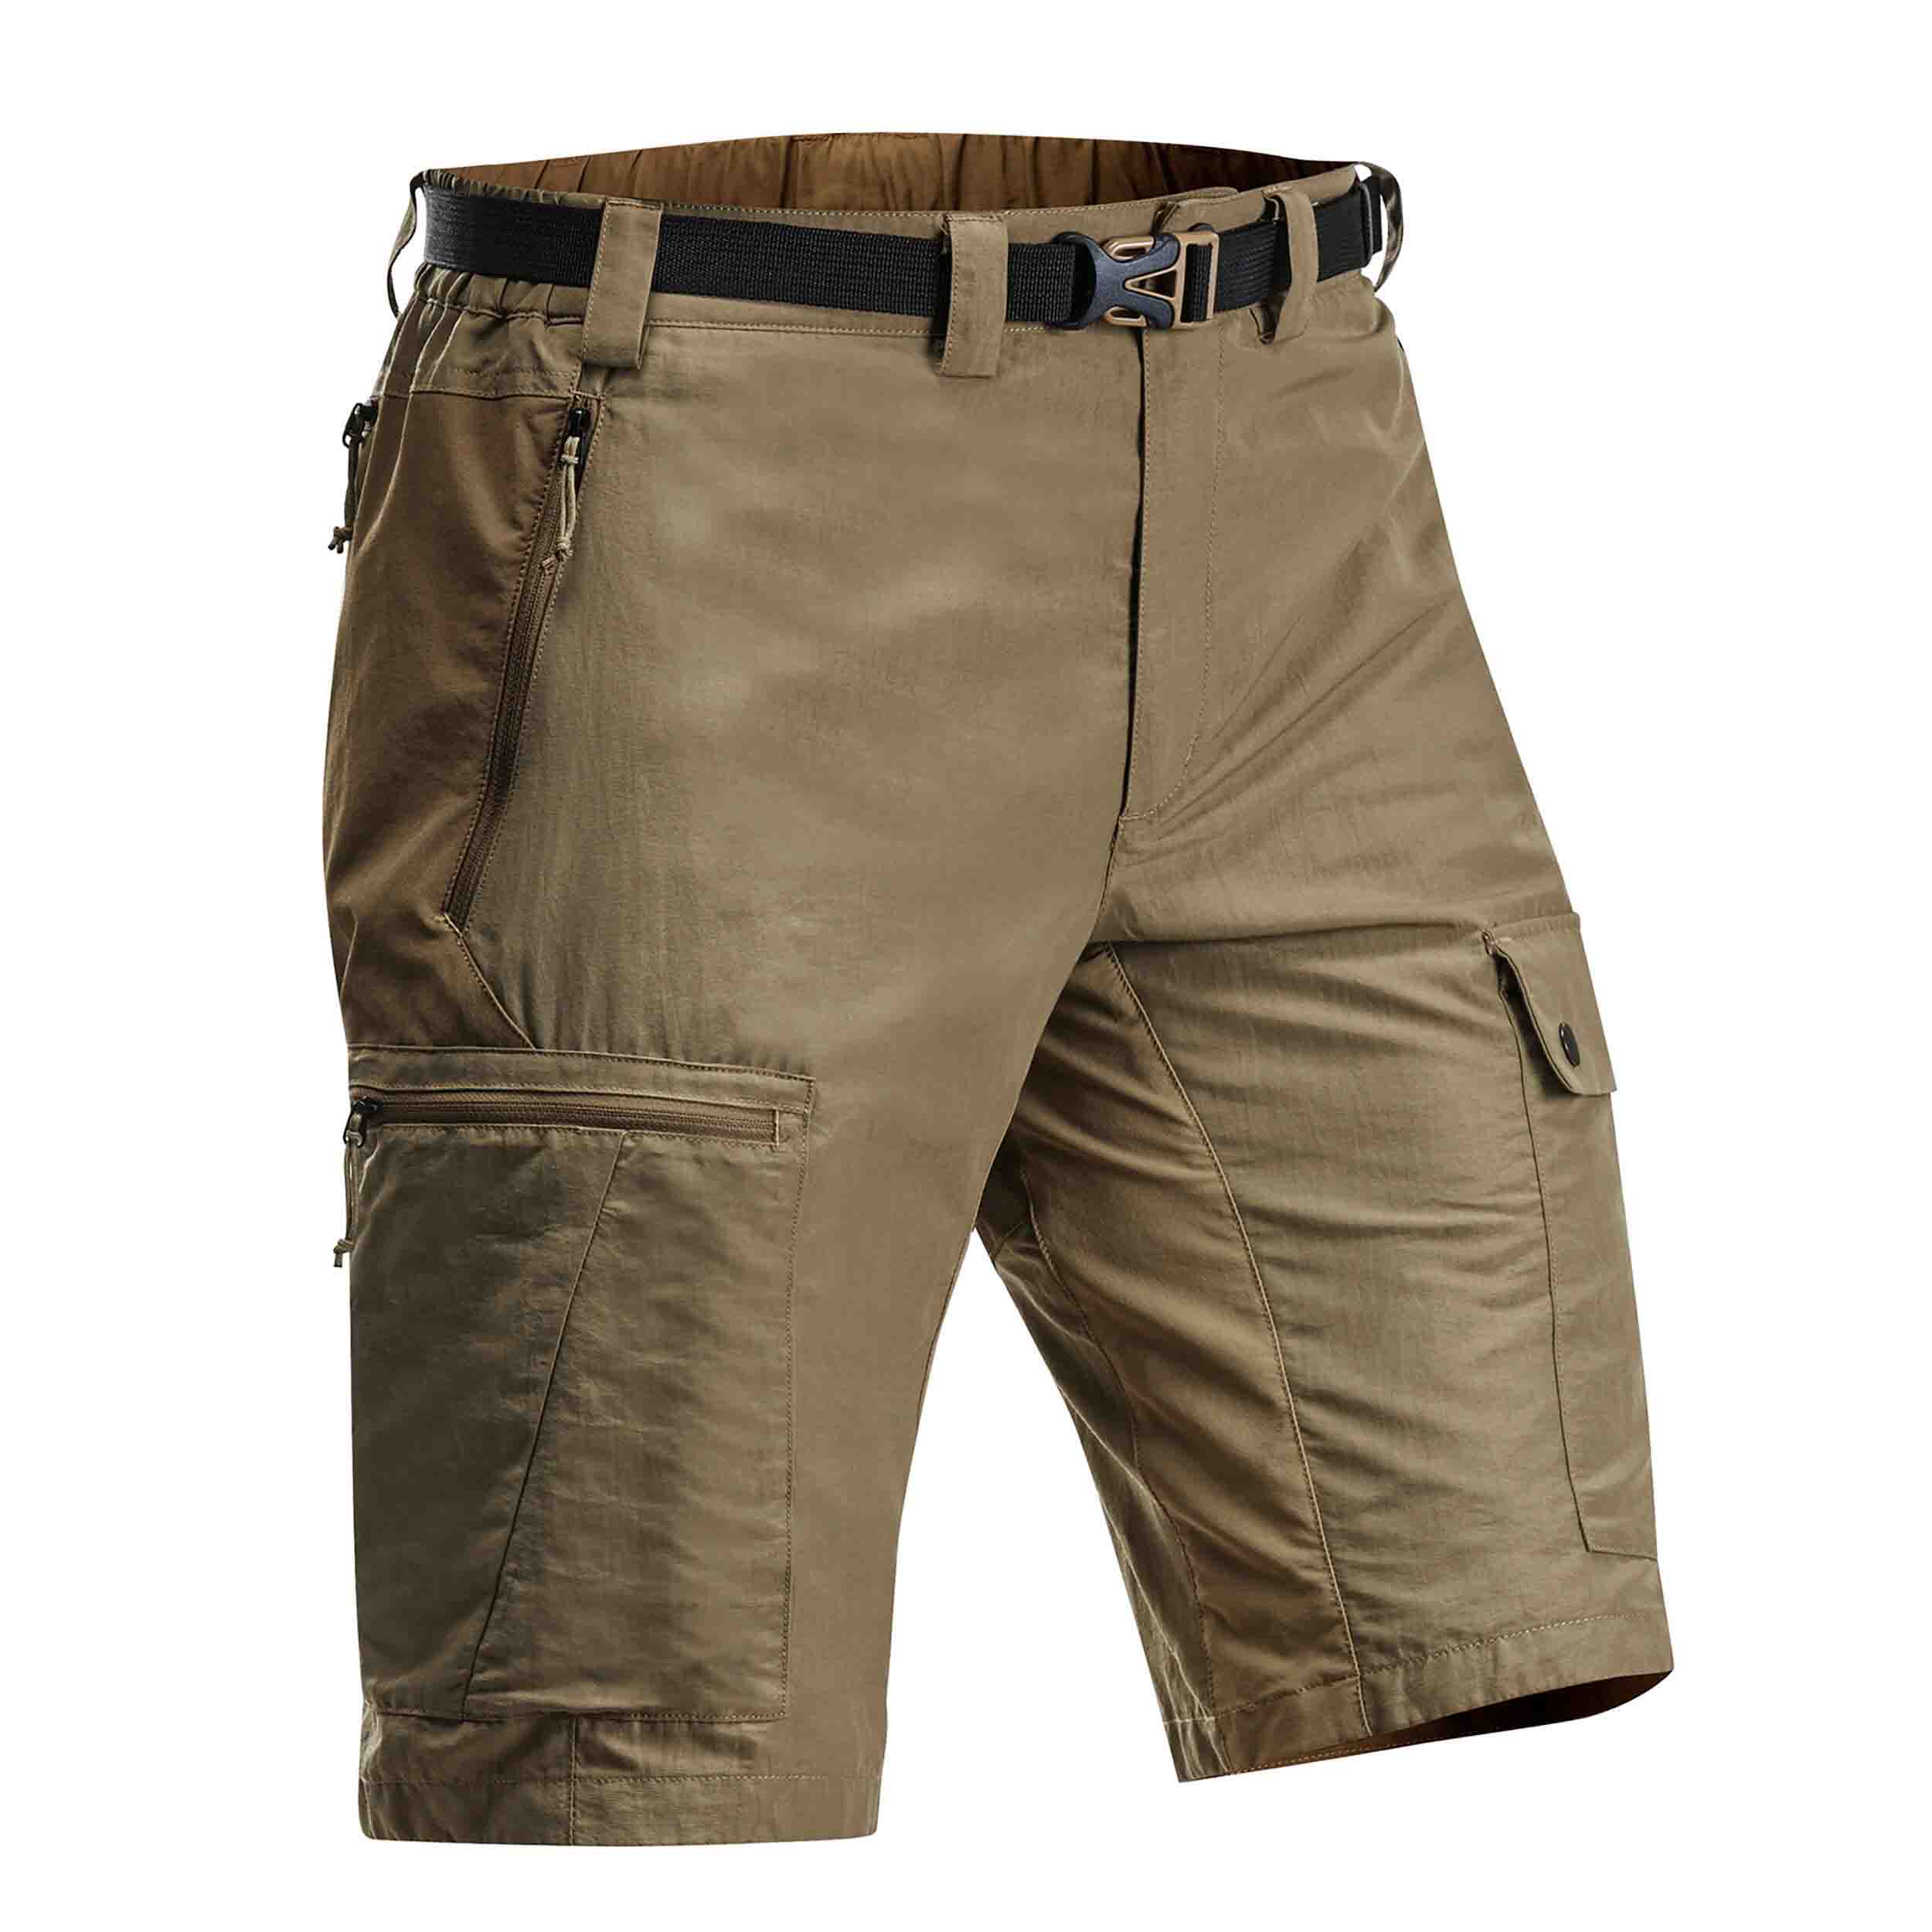 Men's Outdoor Multi-pocket Trekking Chic Colorblock Cargo Shorts